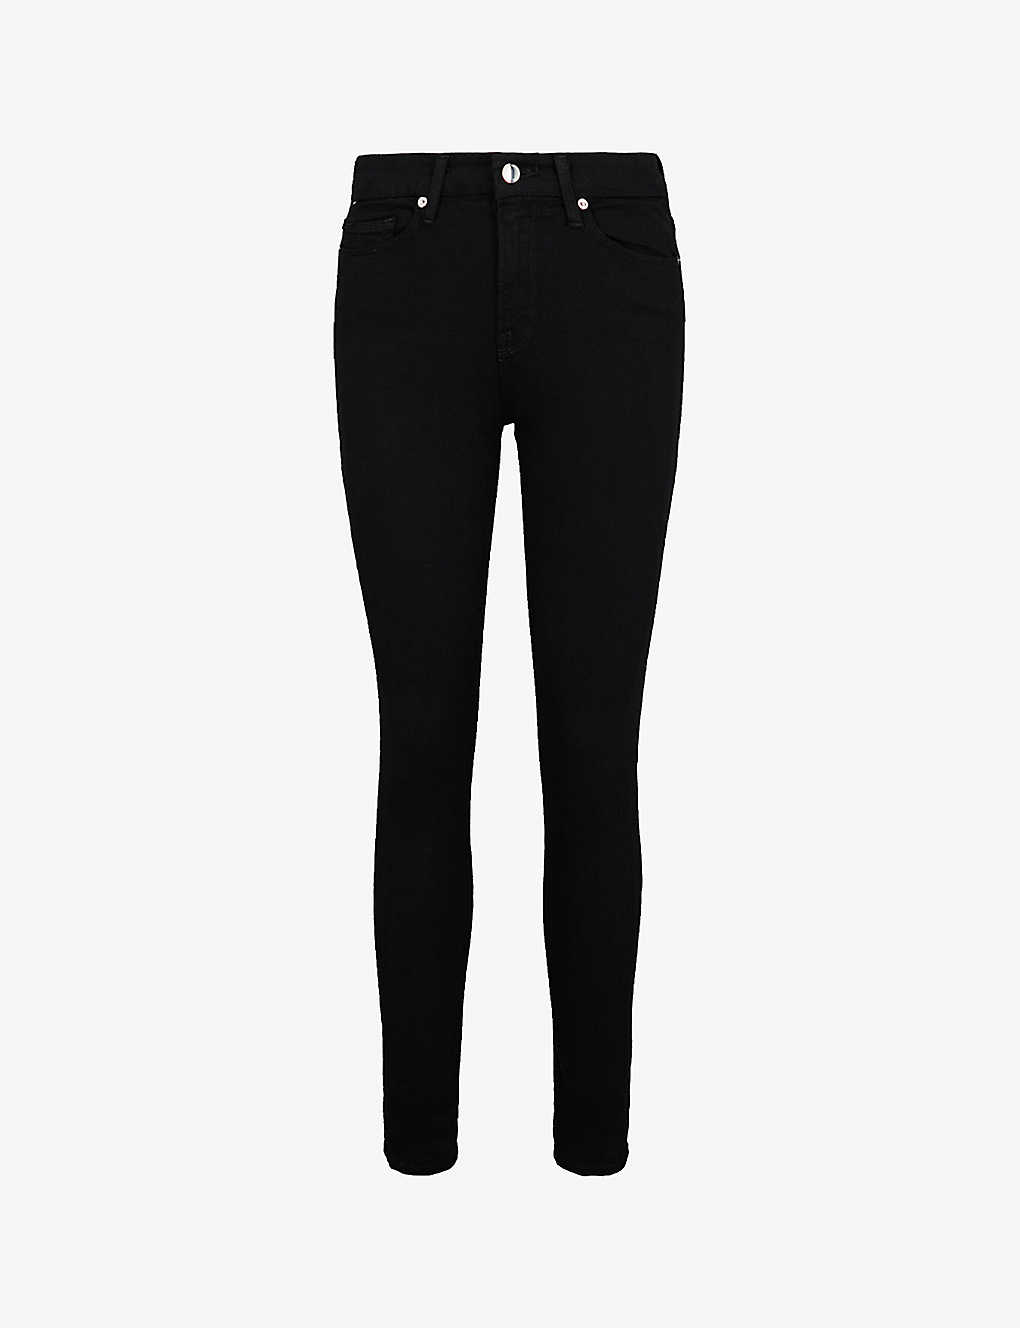 Shop Good American Women's Black001 Good Legs Crop Skinny High-rise Jeans